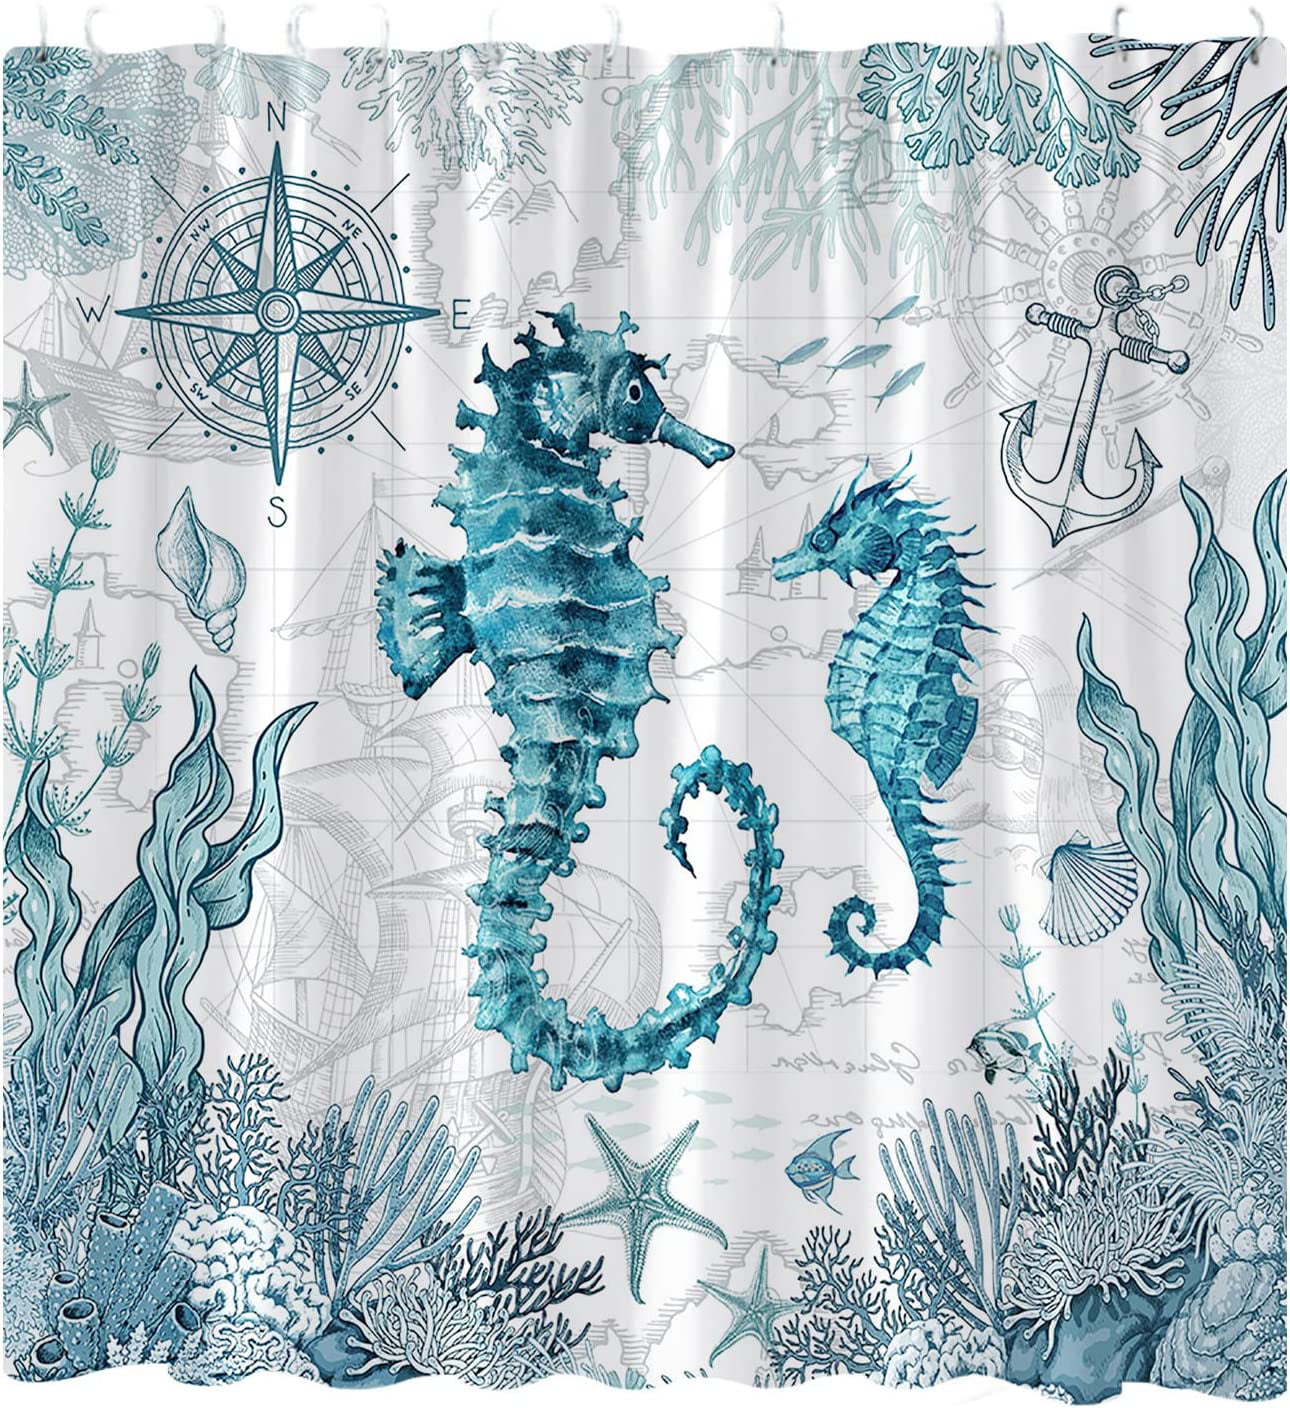 aoselan Seahorse Shower Curtain Nautical Coastal Starfish Seashell Coral Beach  Ocean Themed Underwater Marine Pattern Home Bathroom Polyester Fabric Decor  Curtains Set with Hooks 36 x 72inch 